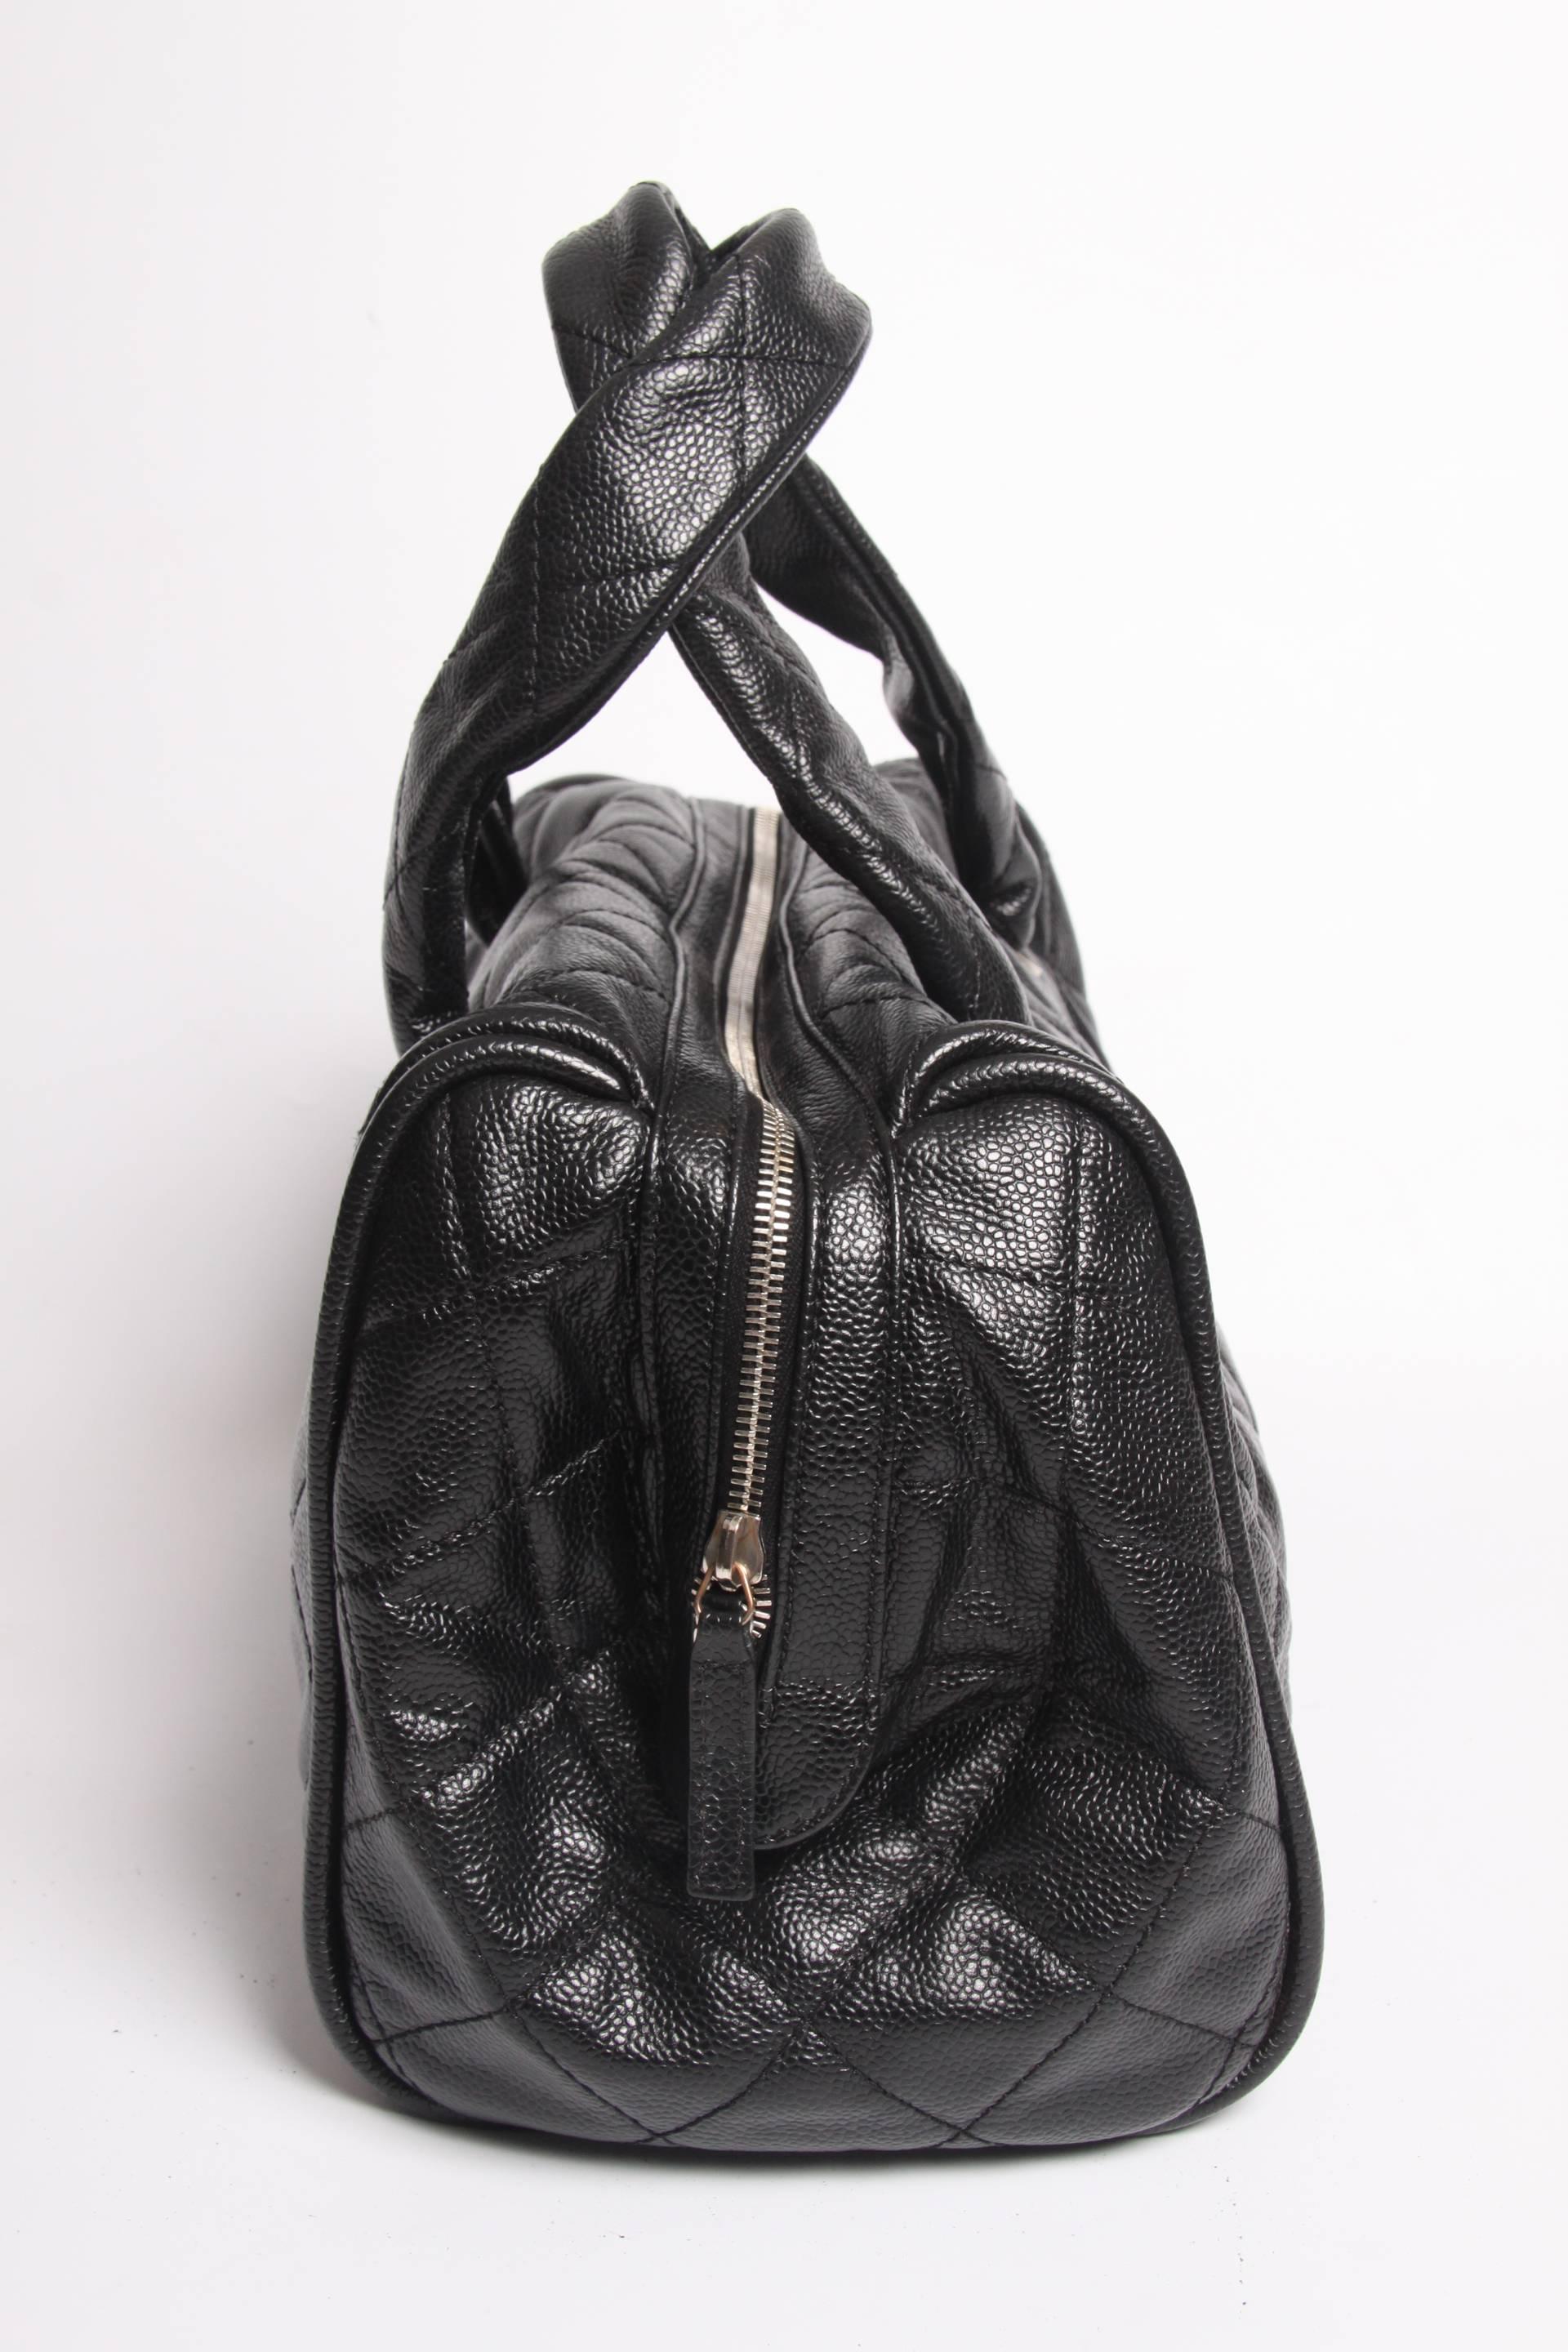 Chanel Top Handle Shopper Bag - black caviar leather  For Sale 4